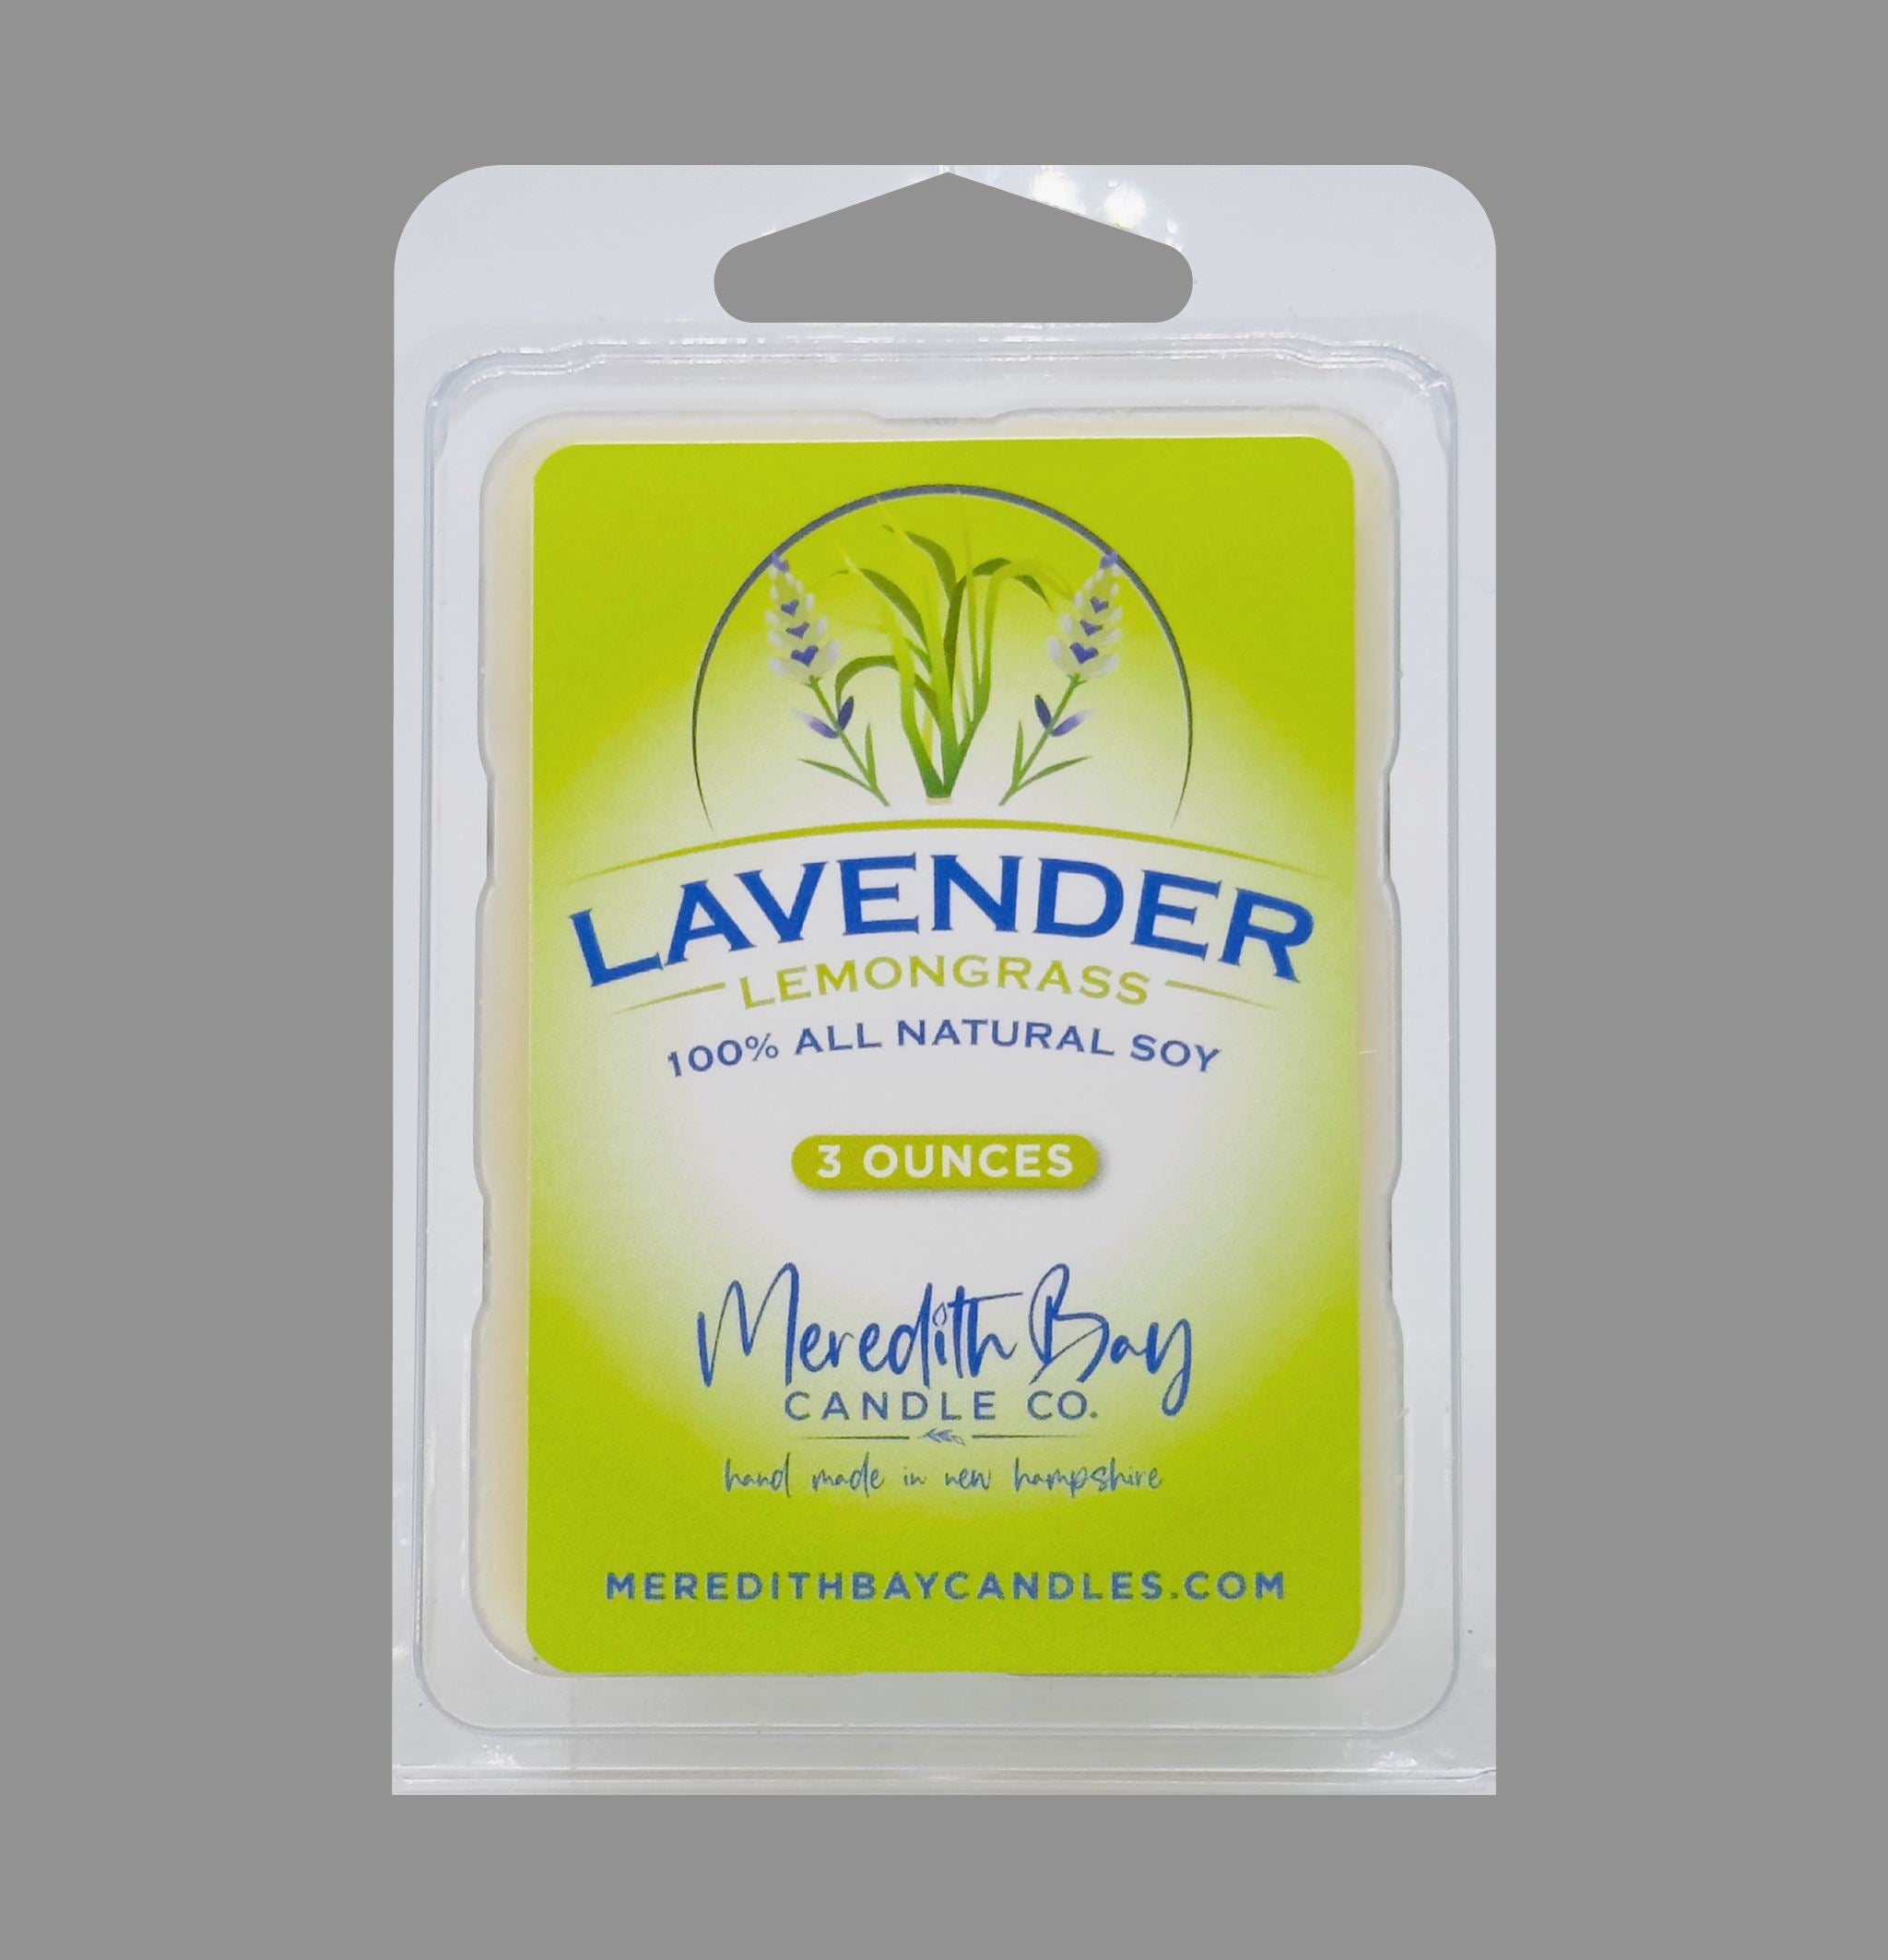 Lavender Lemongrass Wax Melt Meredith Bay Candle Co 